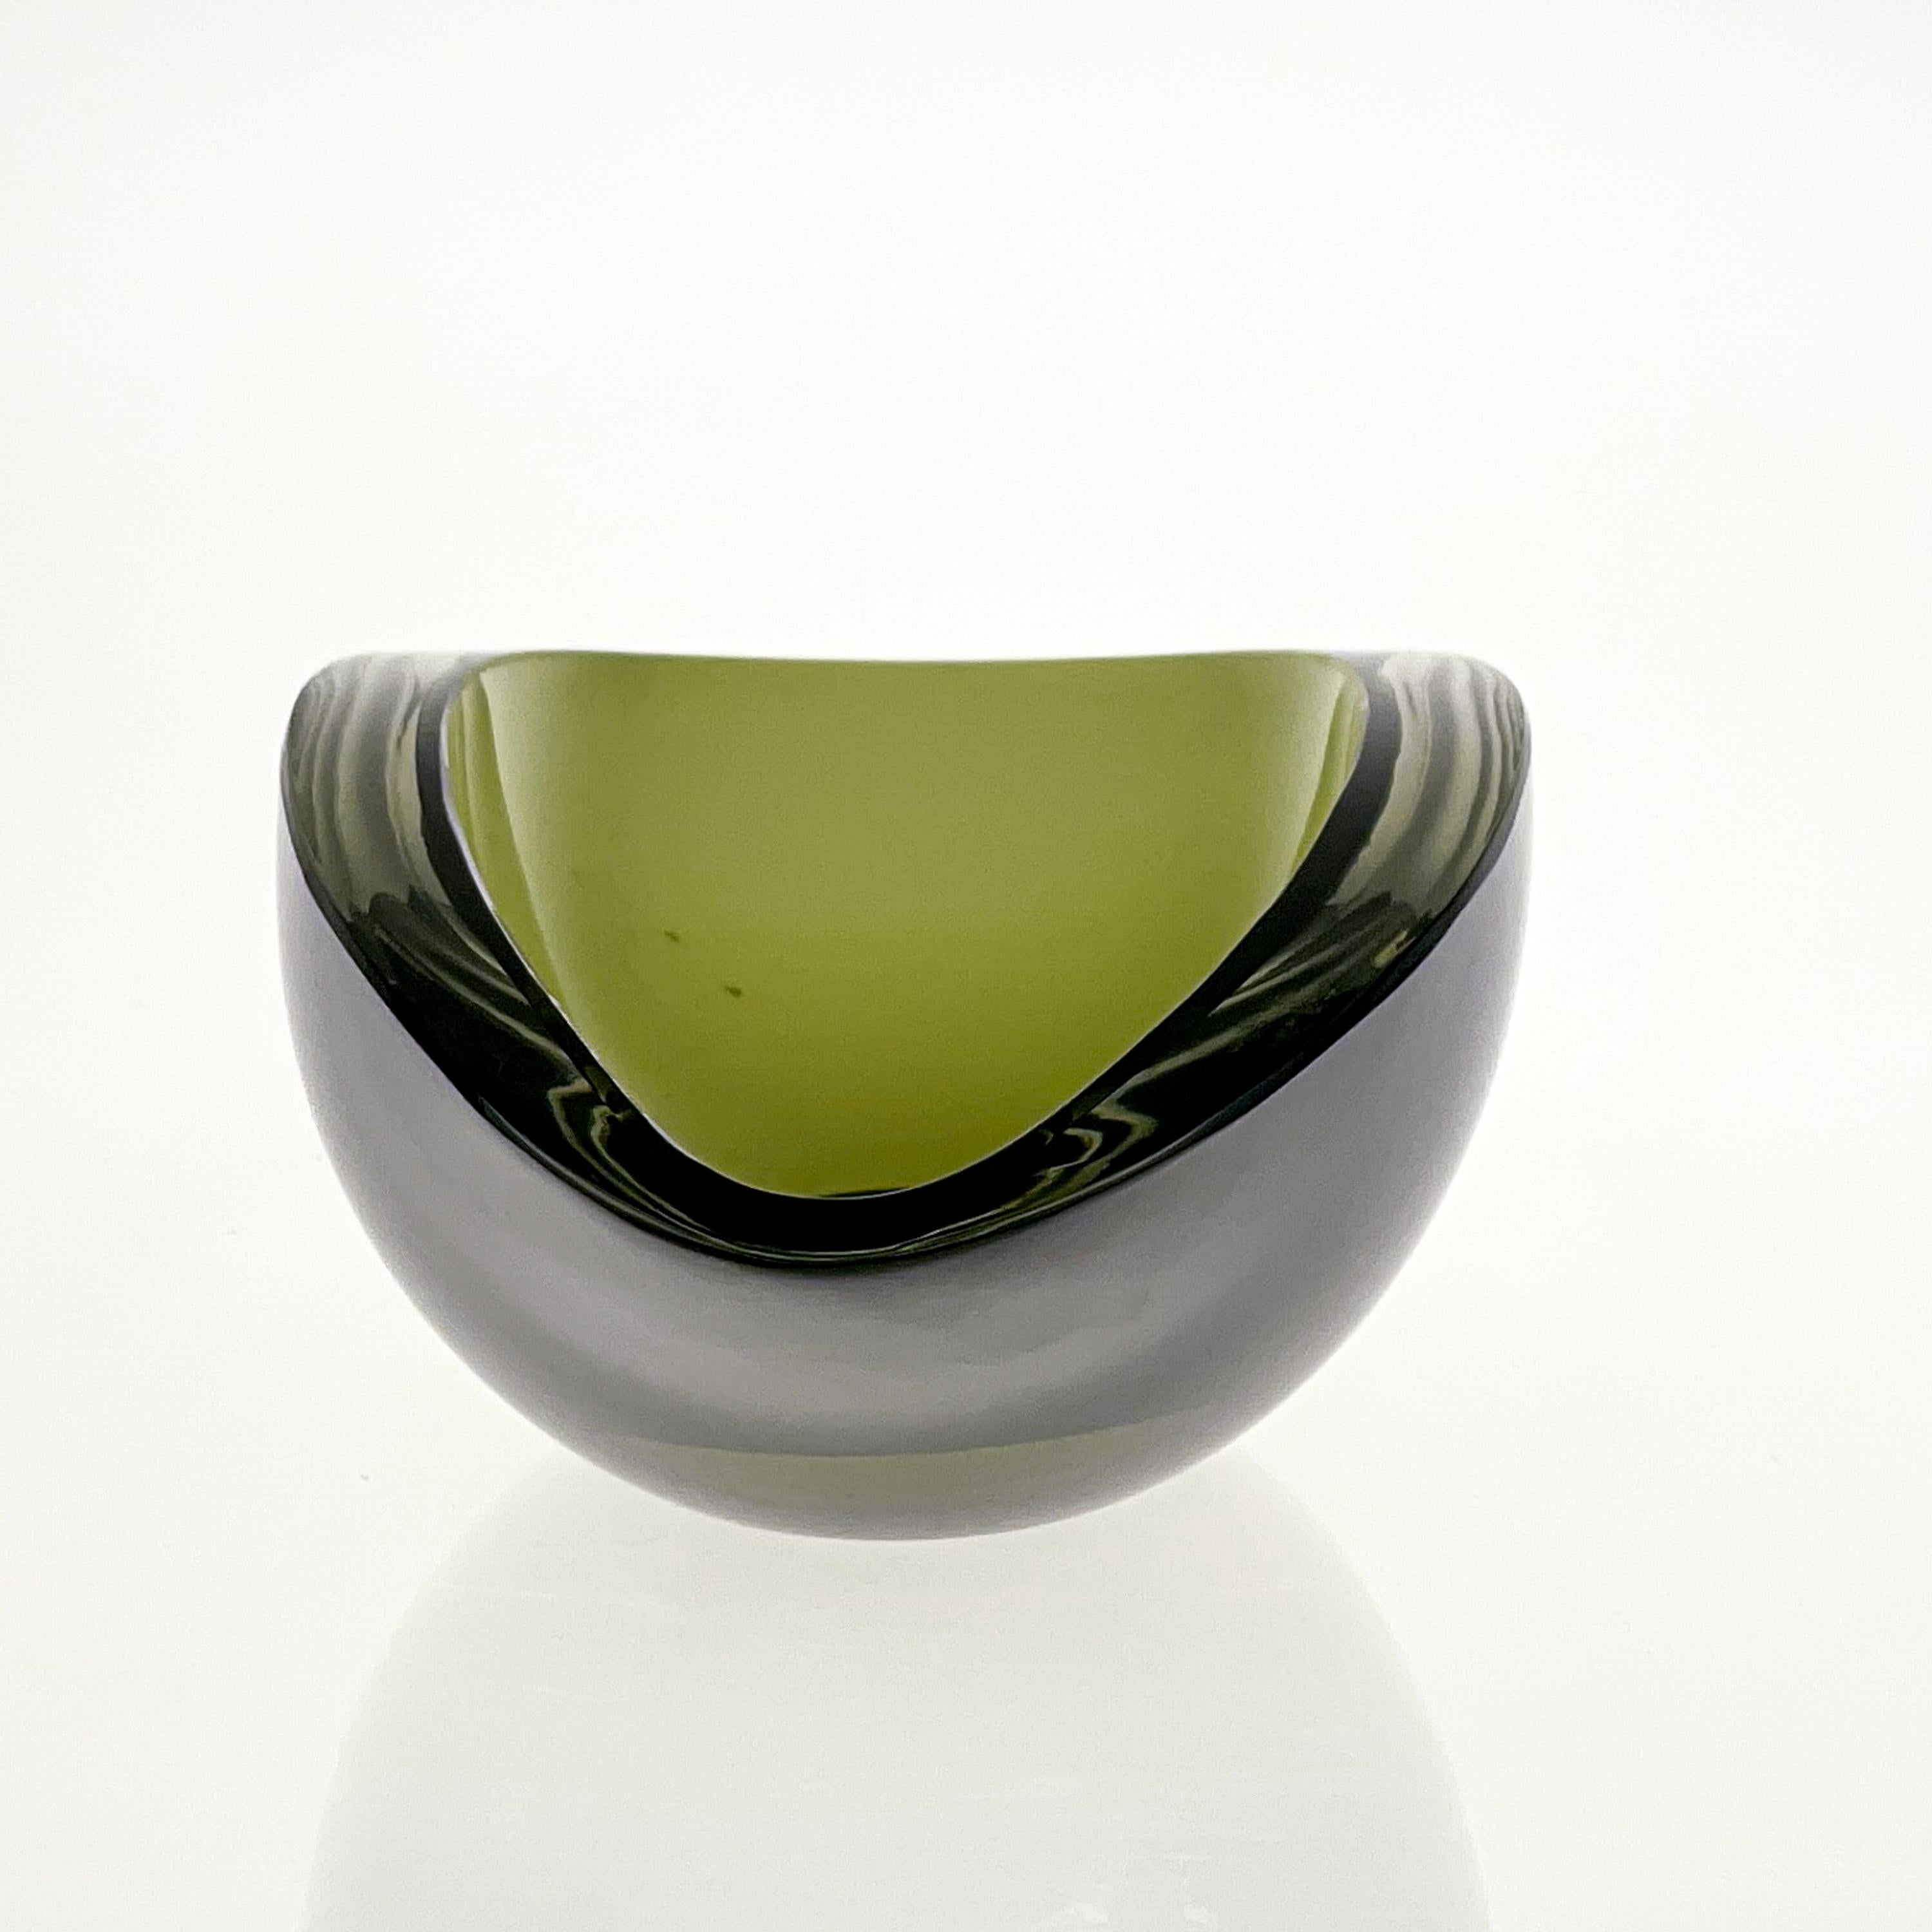 Finnish Kaj Franck, Glass Art-Object 